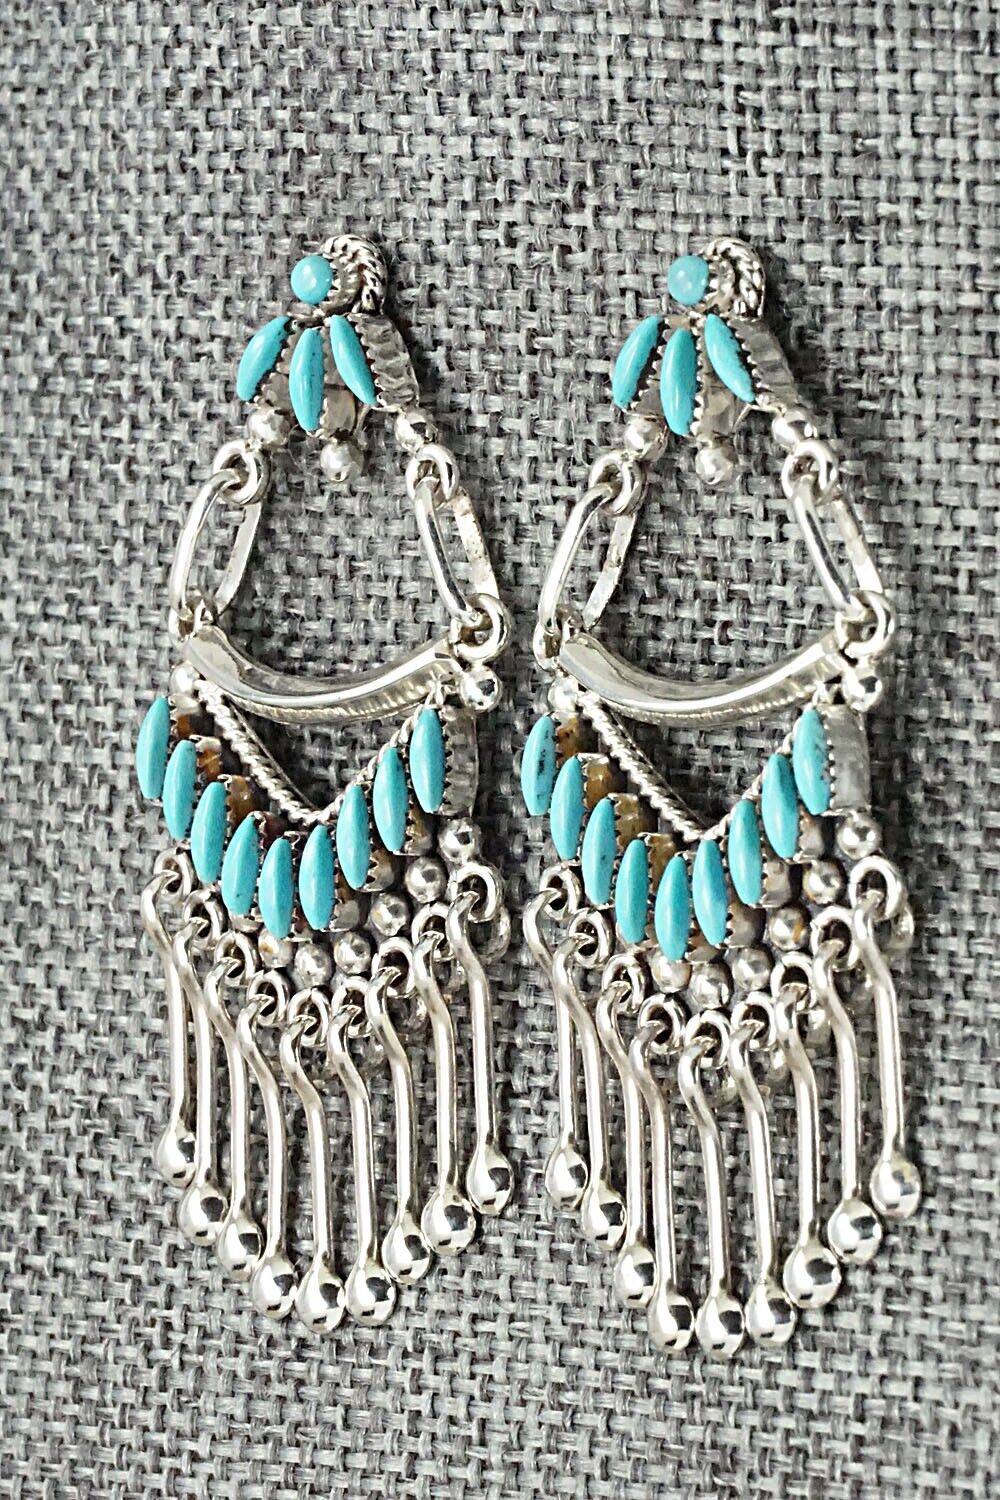 Turquoise & Sterling Silver Earrings - Stewart Nakatewa